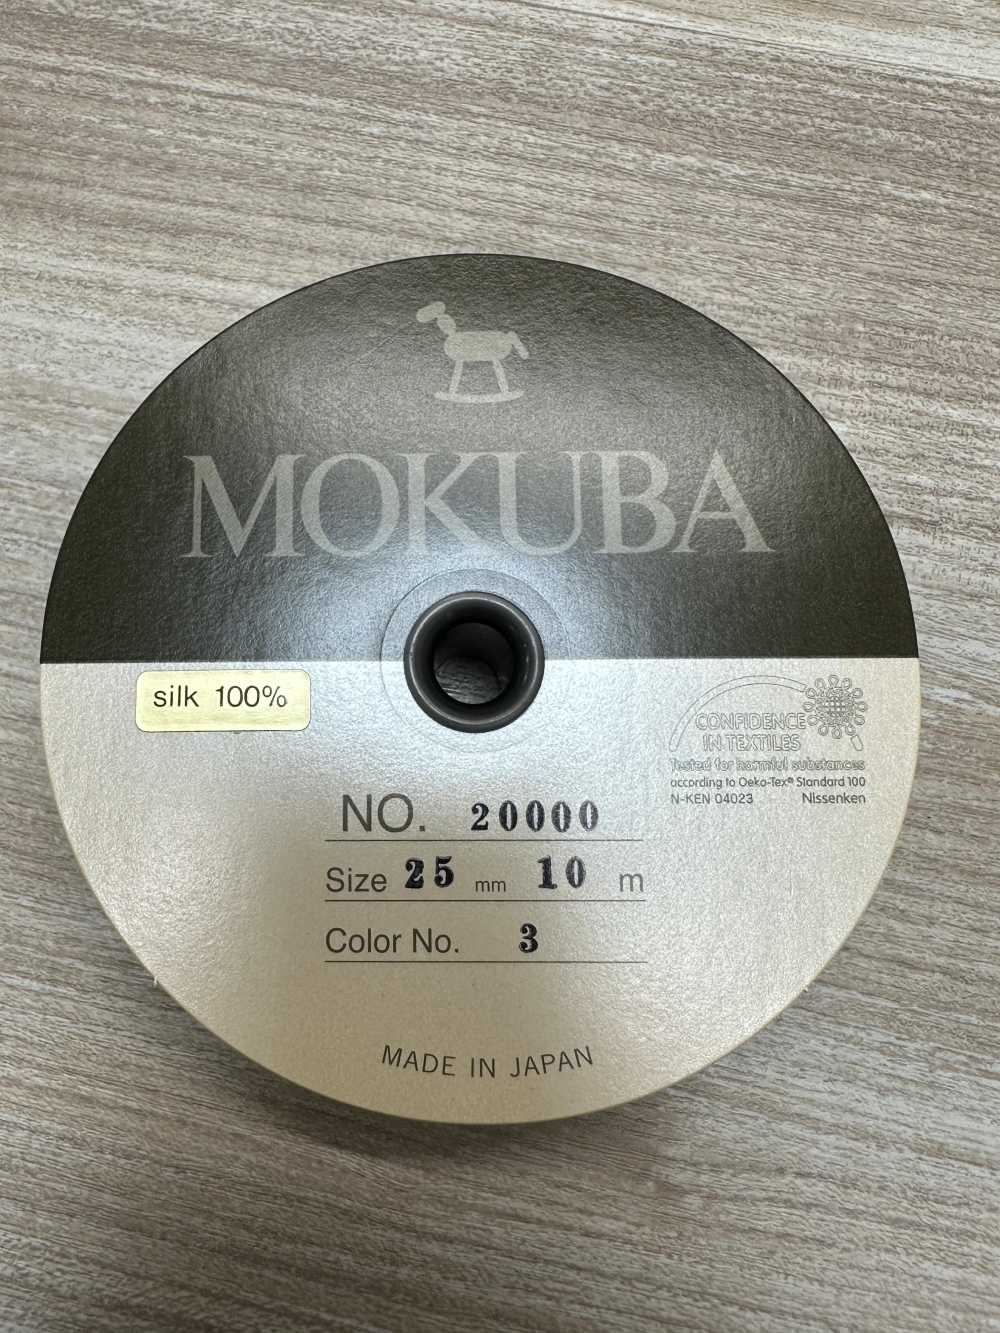 20000 Băng MOKUBA Silk Ruy Băng Gân Sần [Giá đặc Biệt][Dây Băng Ruy Băng] Mokuba